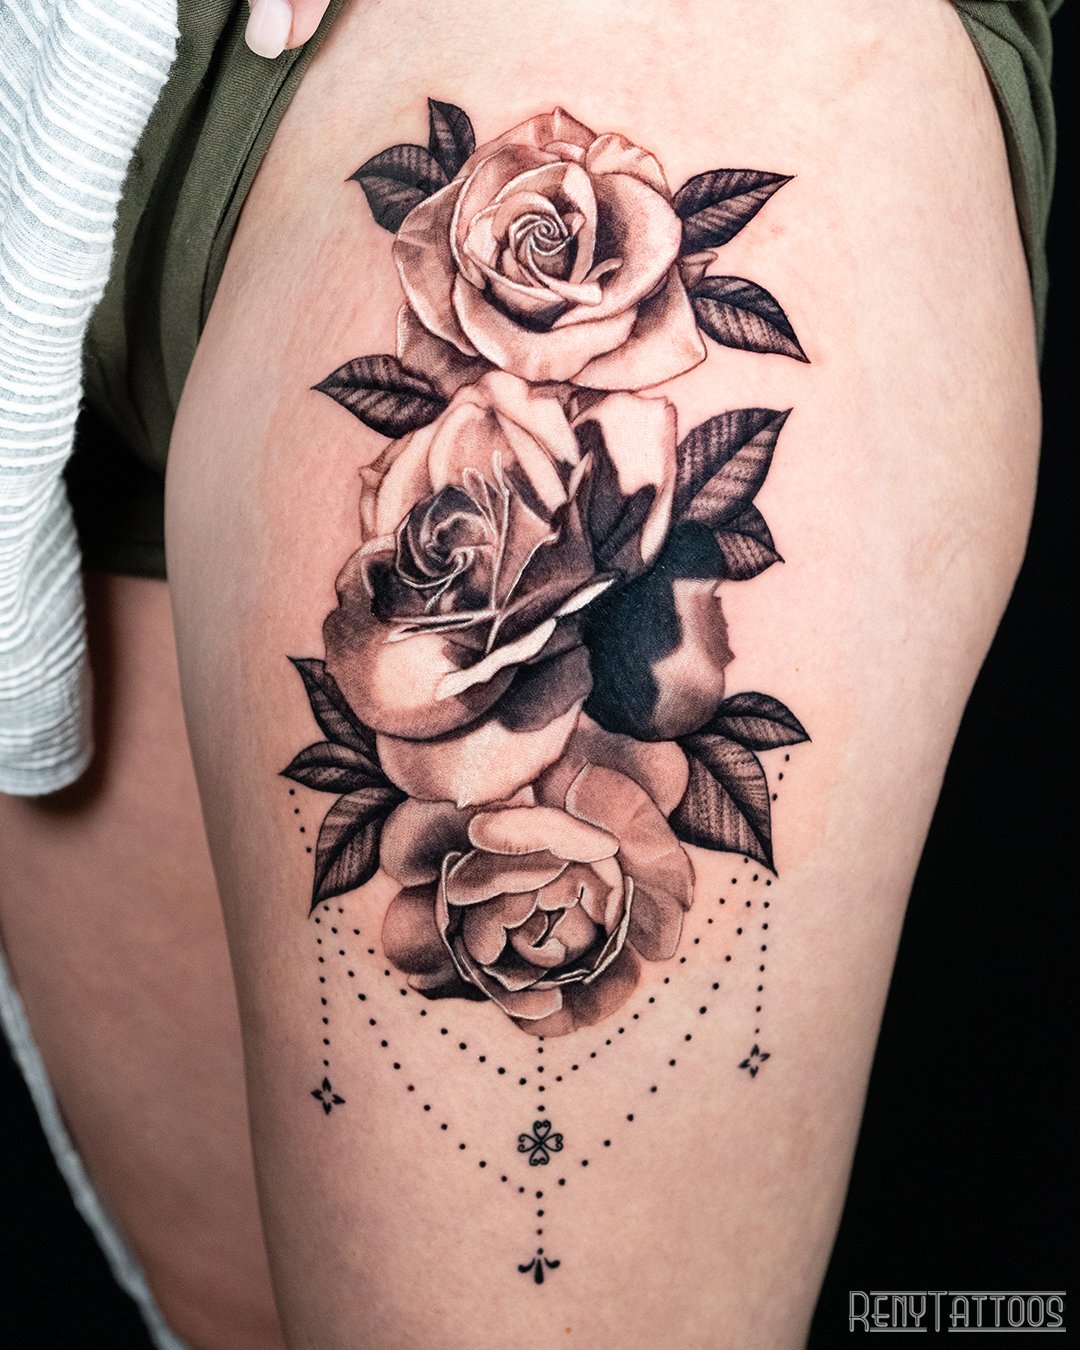 RenyTattoos — Black and Grey Floral Tattoos